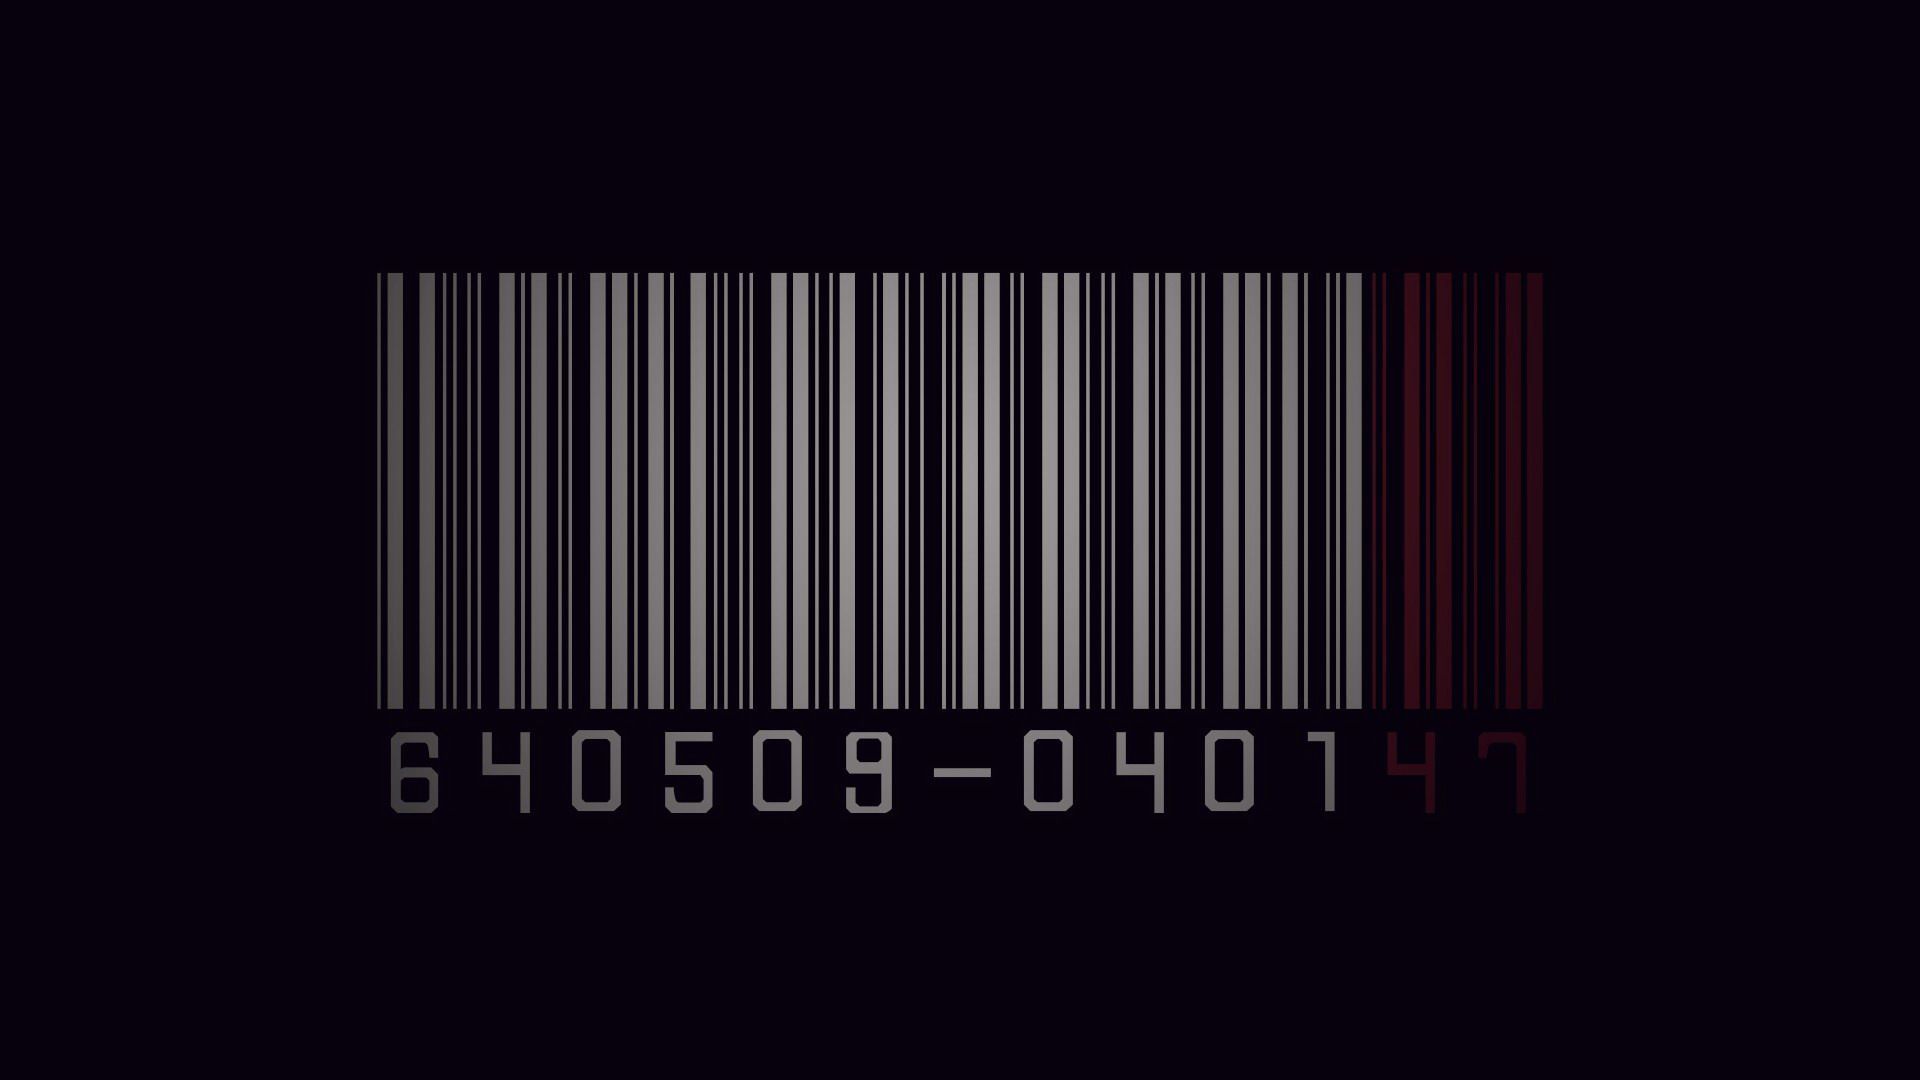 Hitman Absolution Game Bar Code Wallpaper